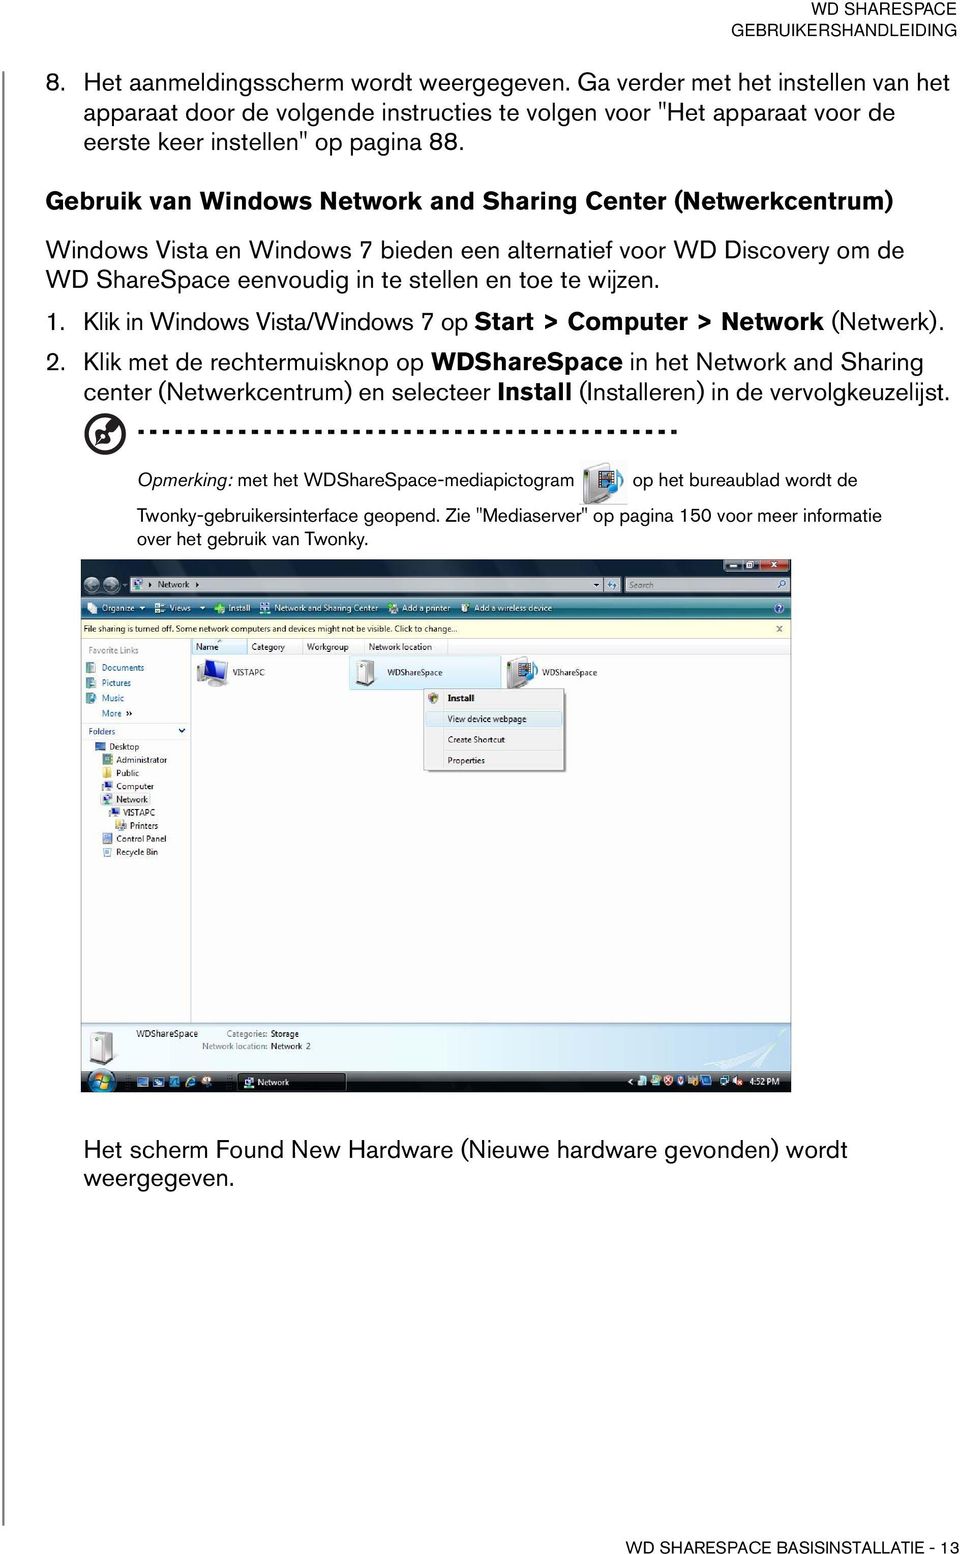 Klik in Windows Vista/Windows 7 op Start > Computer > Network (Netwerk). 2.